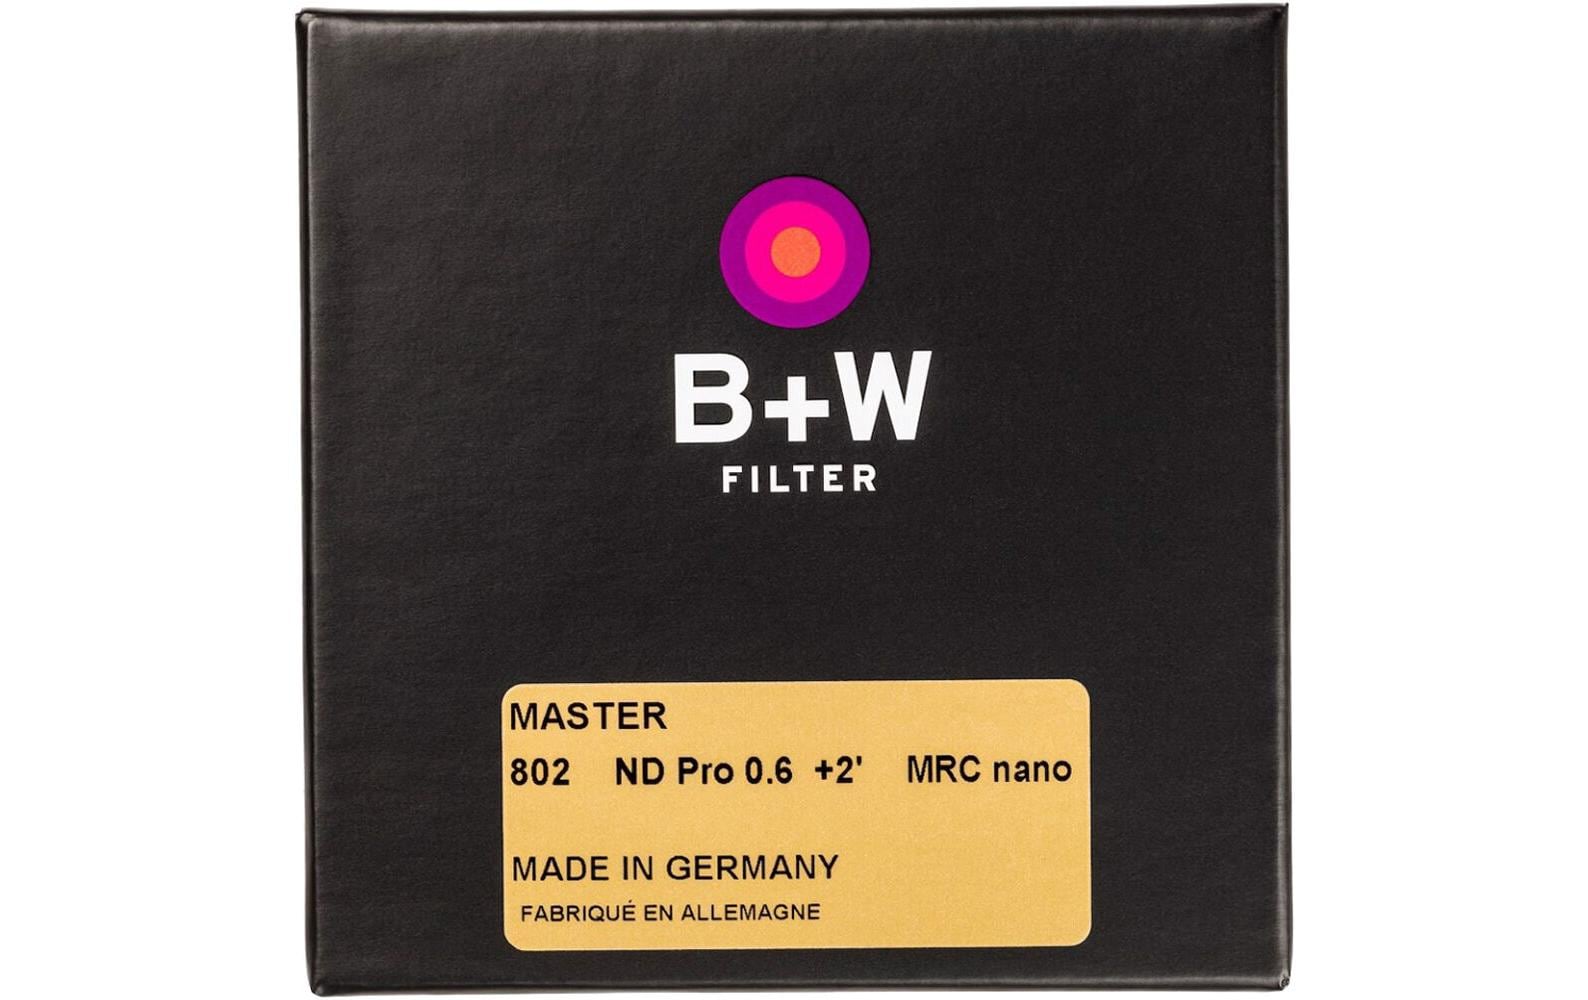 B+W Graufilter MASTER 802 ND 0.6 MRC nano – 55 mm